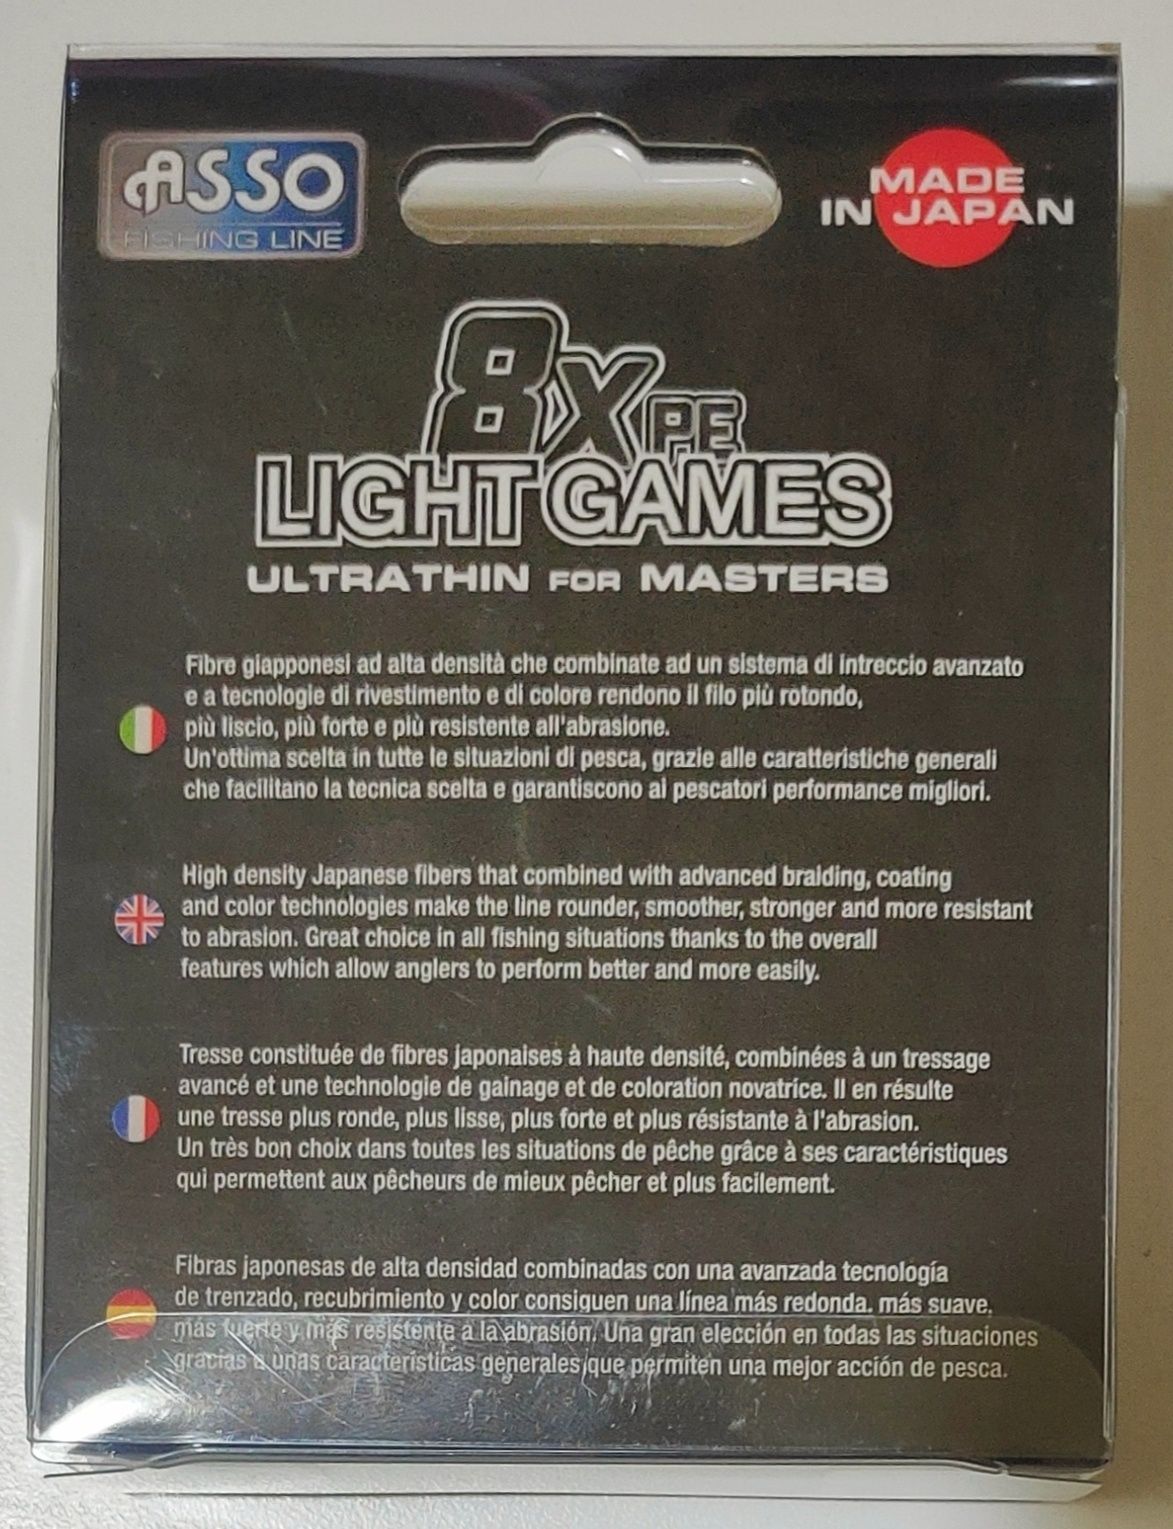 ASSO PE 8X Light Games Multicolor 300M